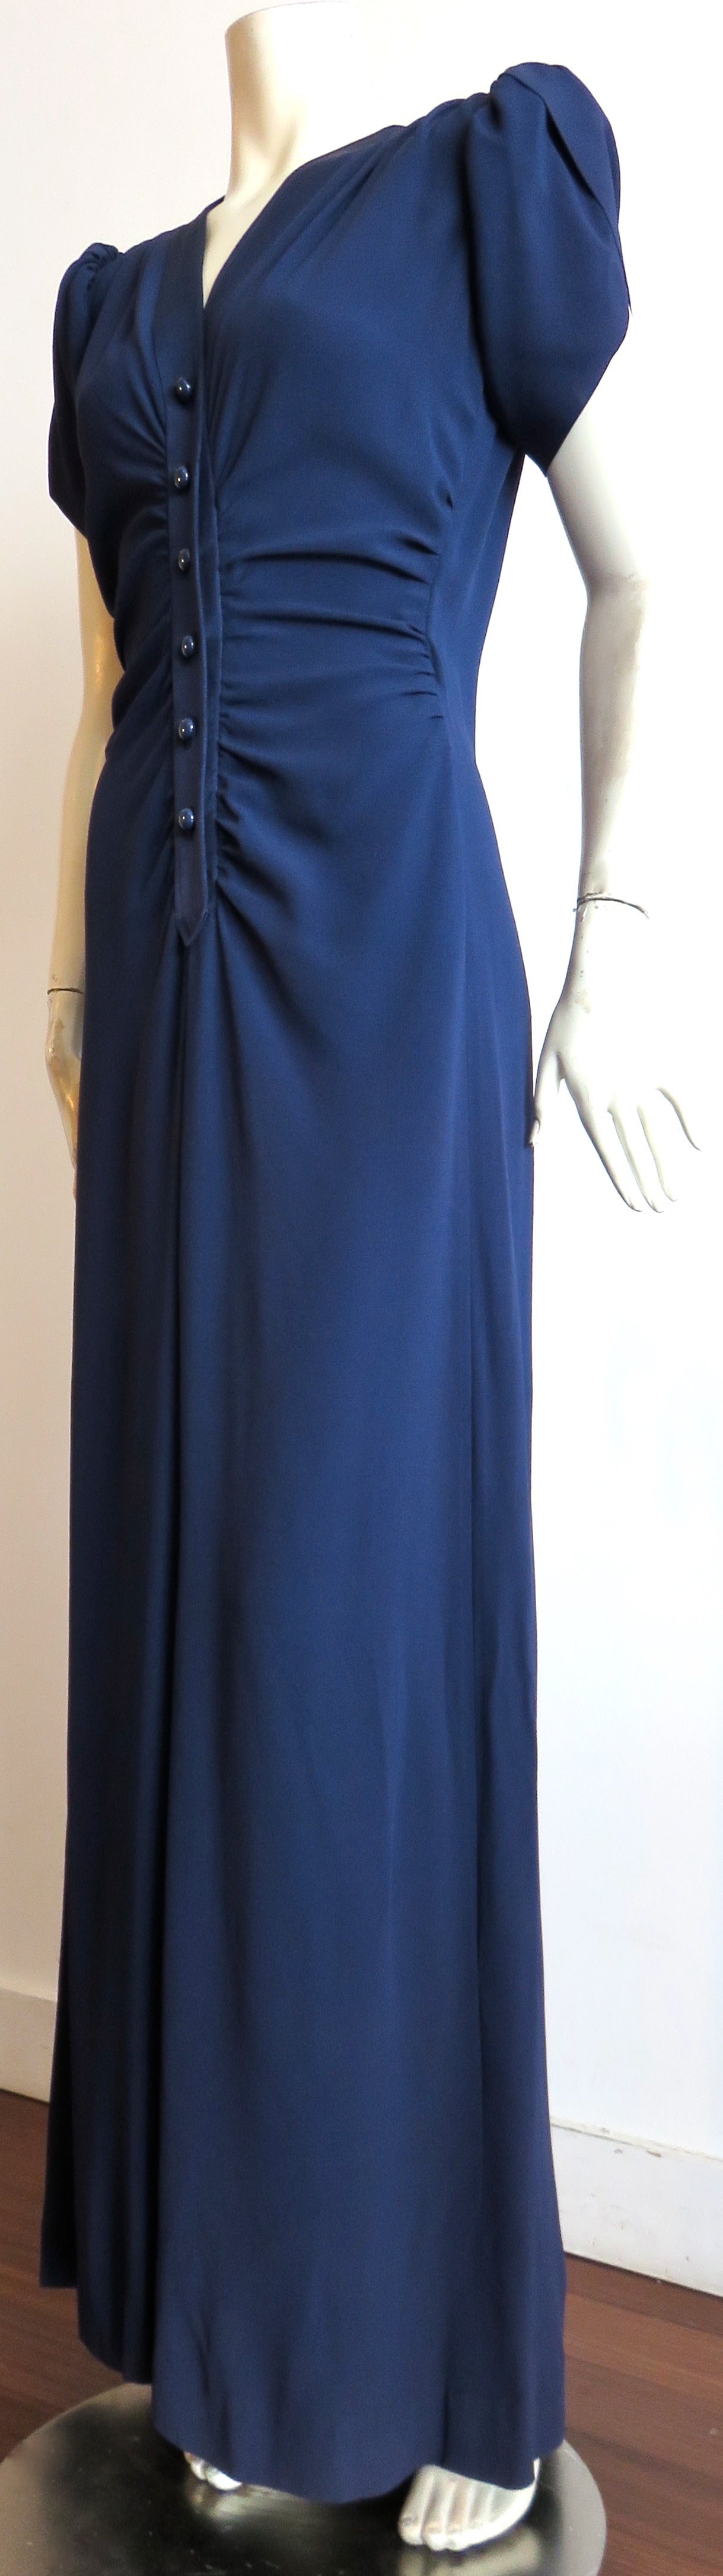 1983 YVES SAINT LAURENT 40's style blue crepe dress For Sale 2